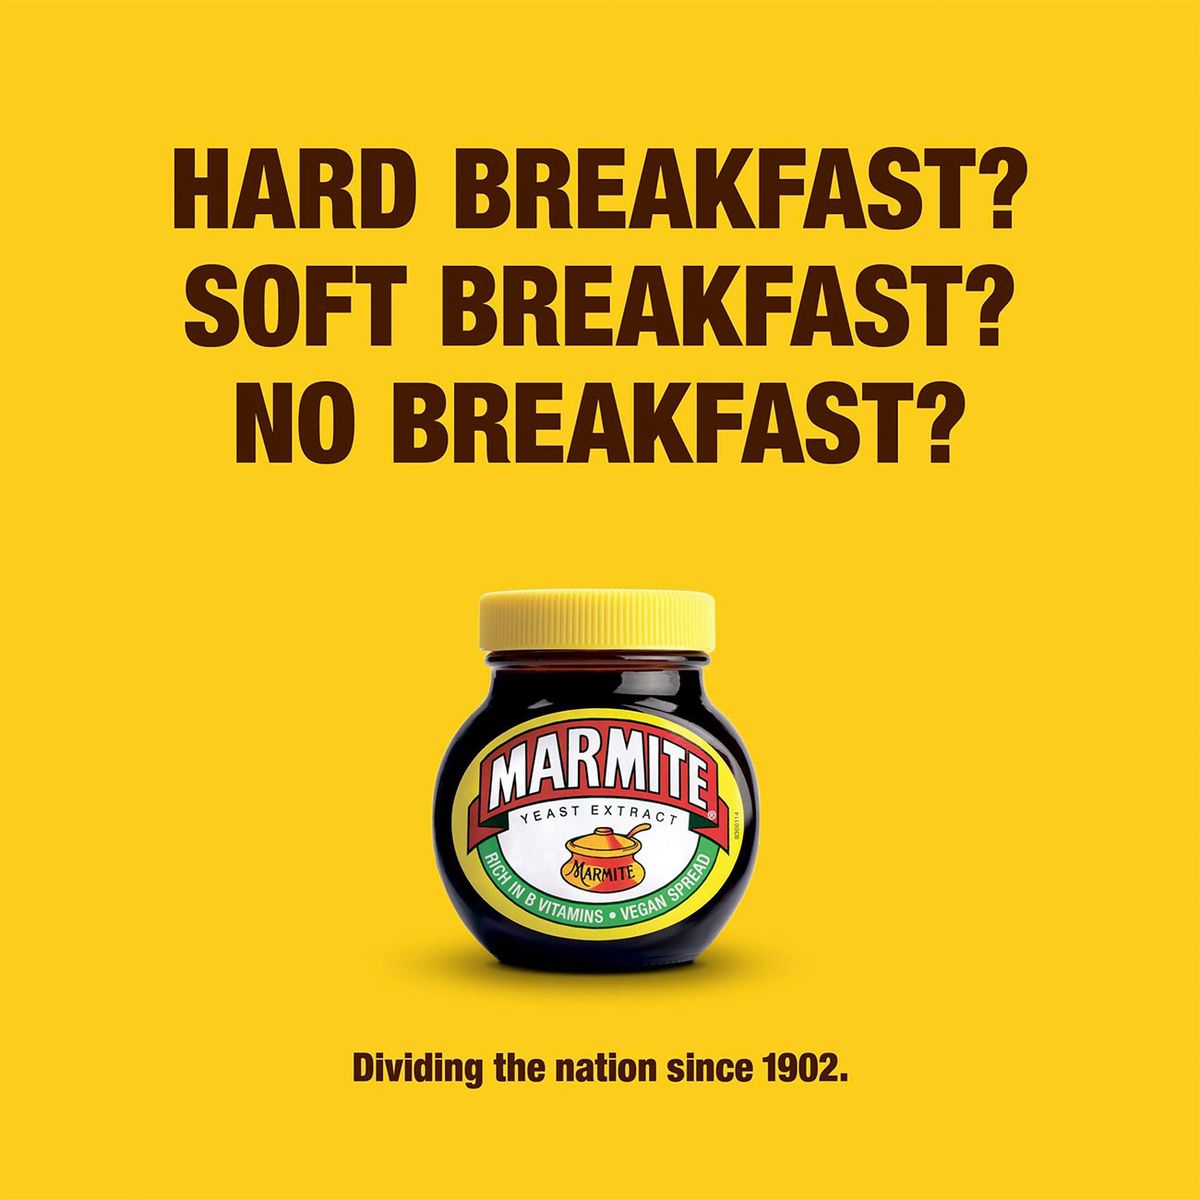 Printwerbung: Marmite